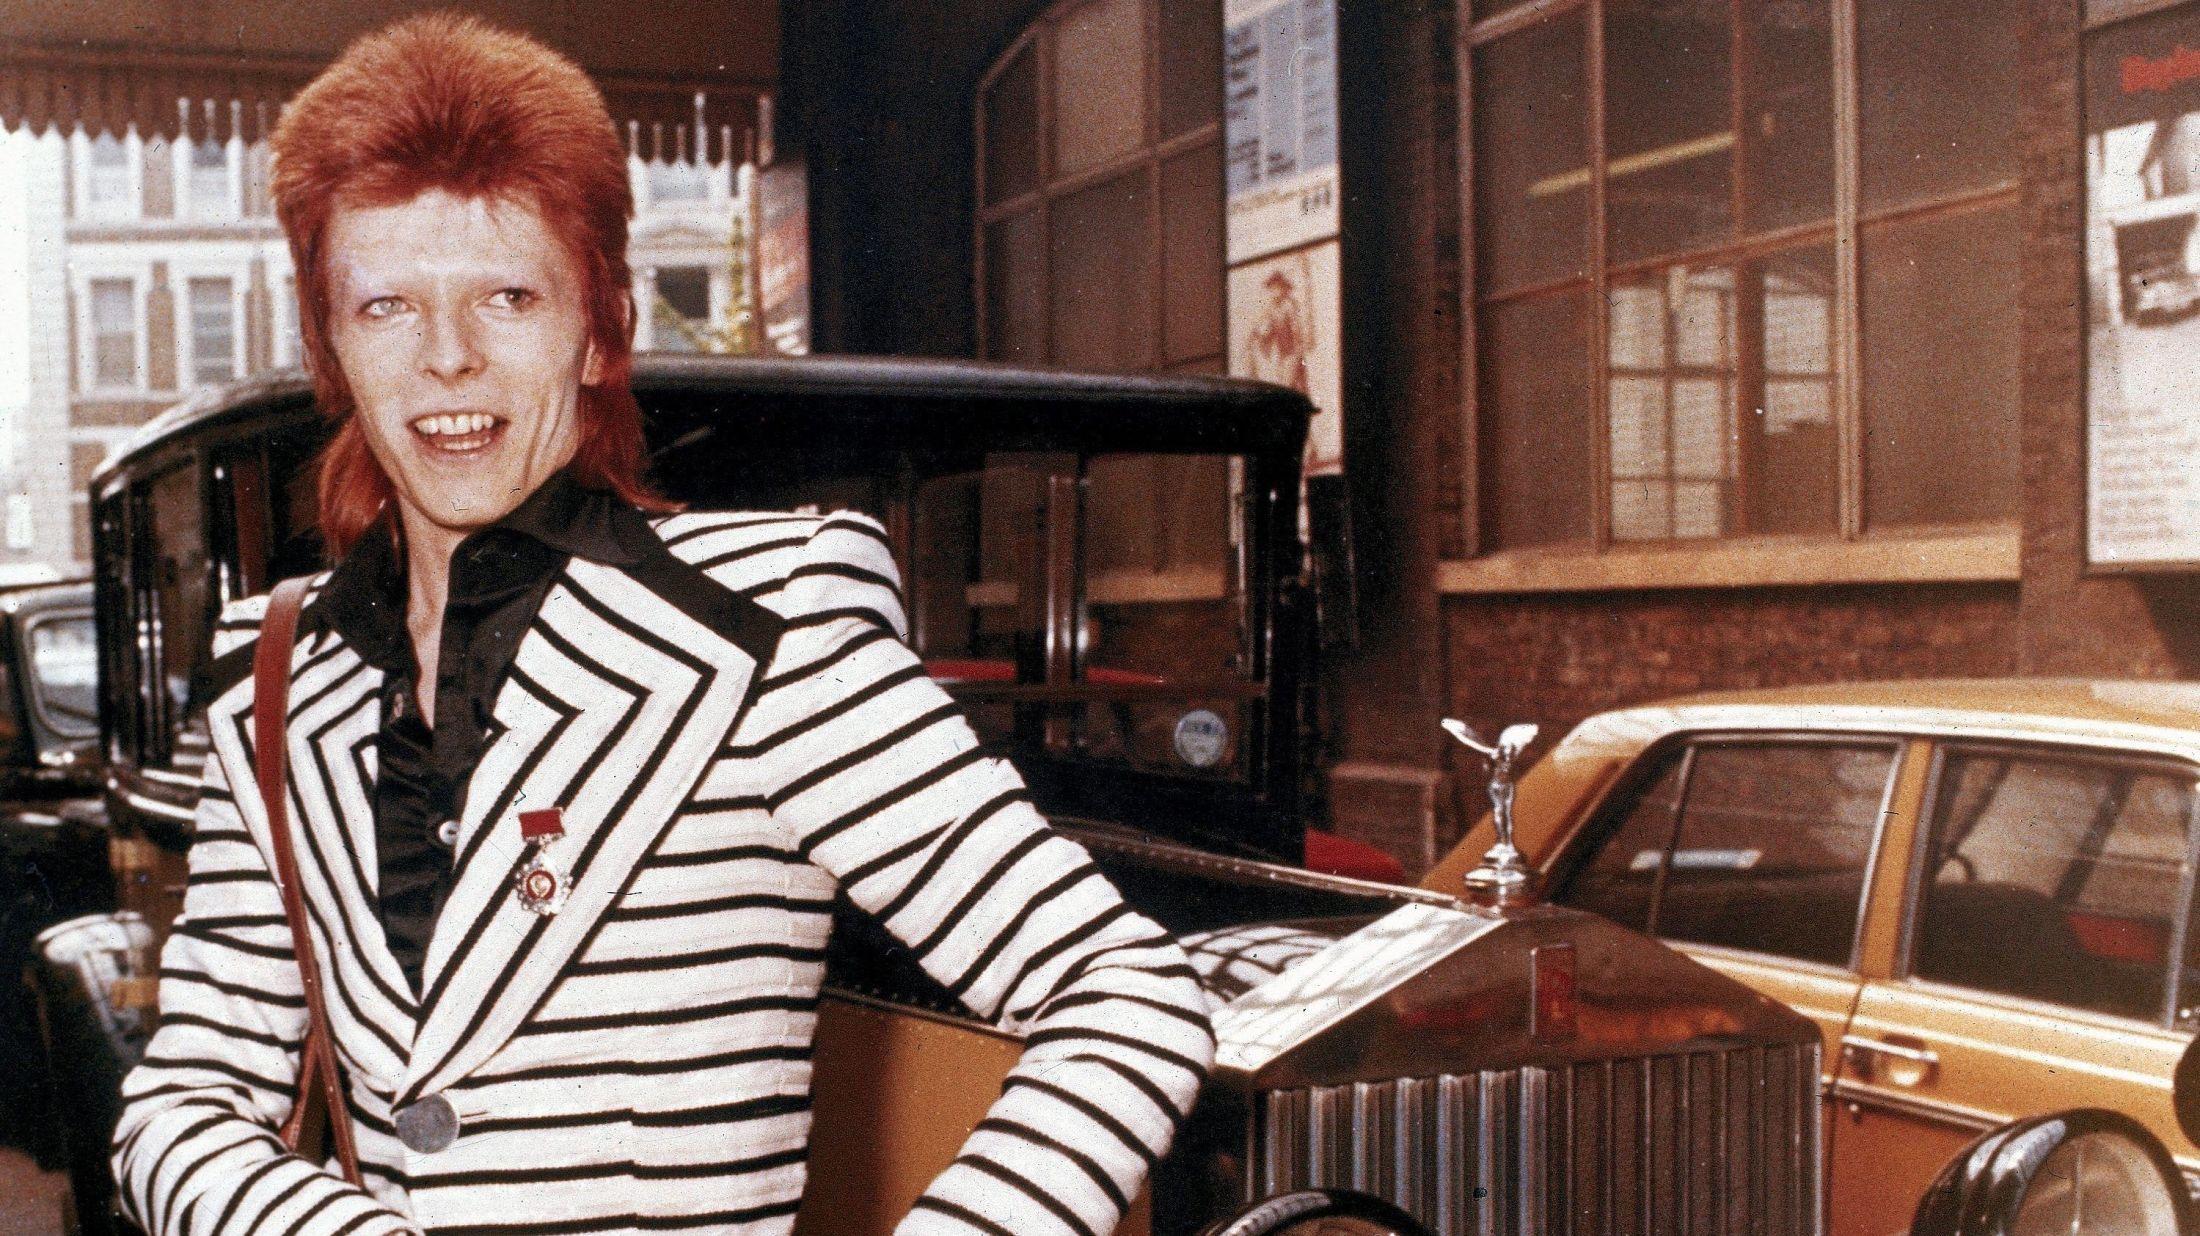 ZIGGY-STIL: David Bowie med det karakteristiske røde håret og vilt antrekk fra Ziggy Stardust-tiden på 70-tallet. Foto: NTB Scanpix